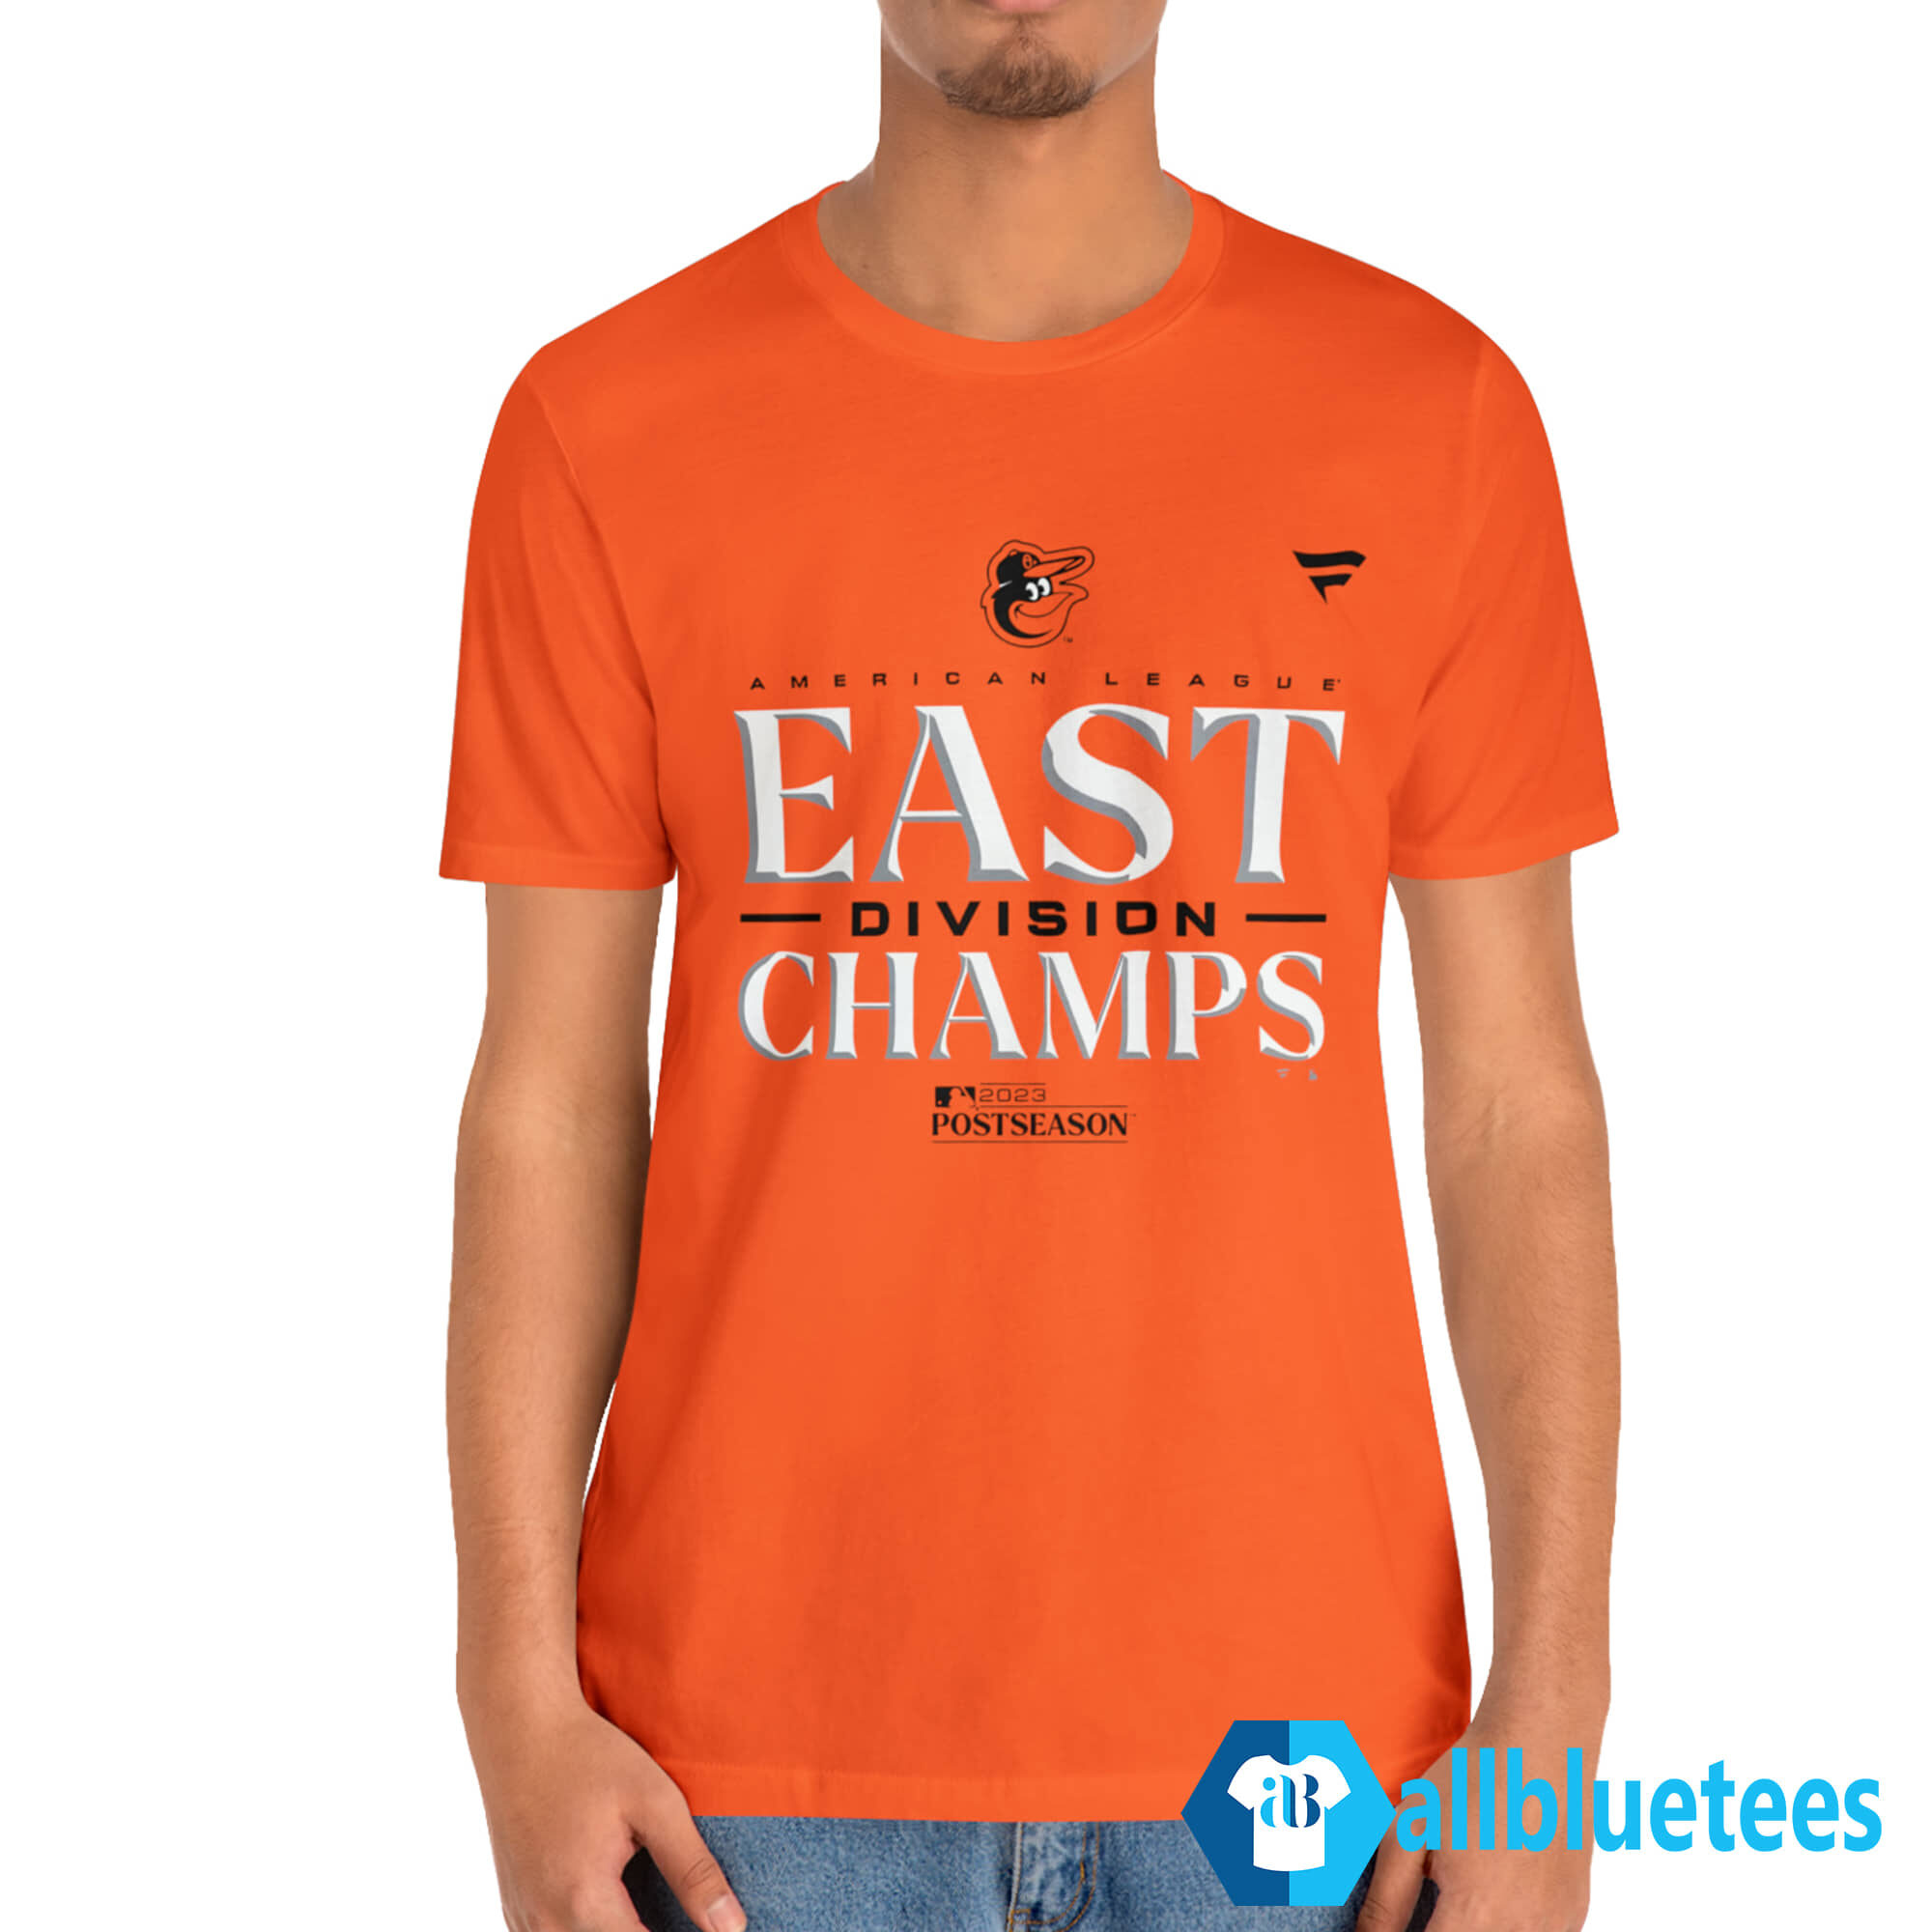 Baltimore Orioles Al East Champions 2023 T-Shirt